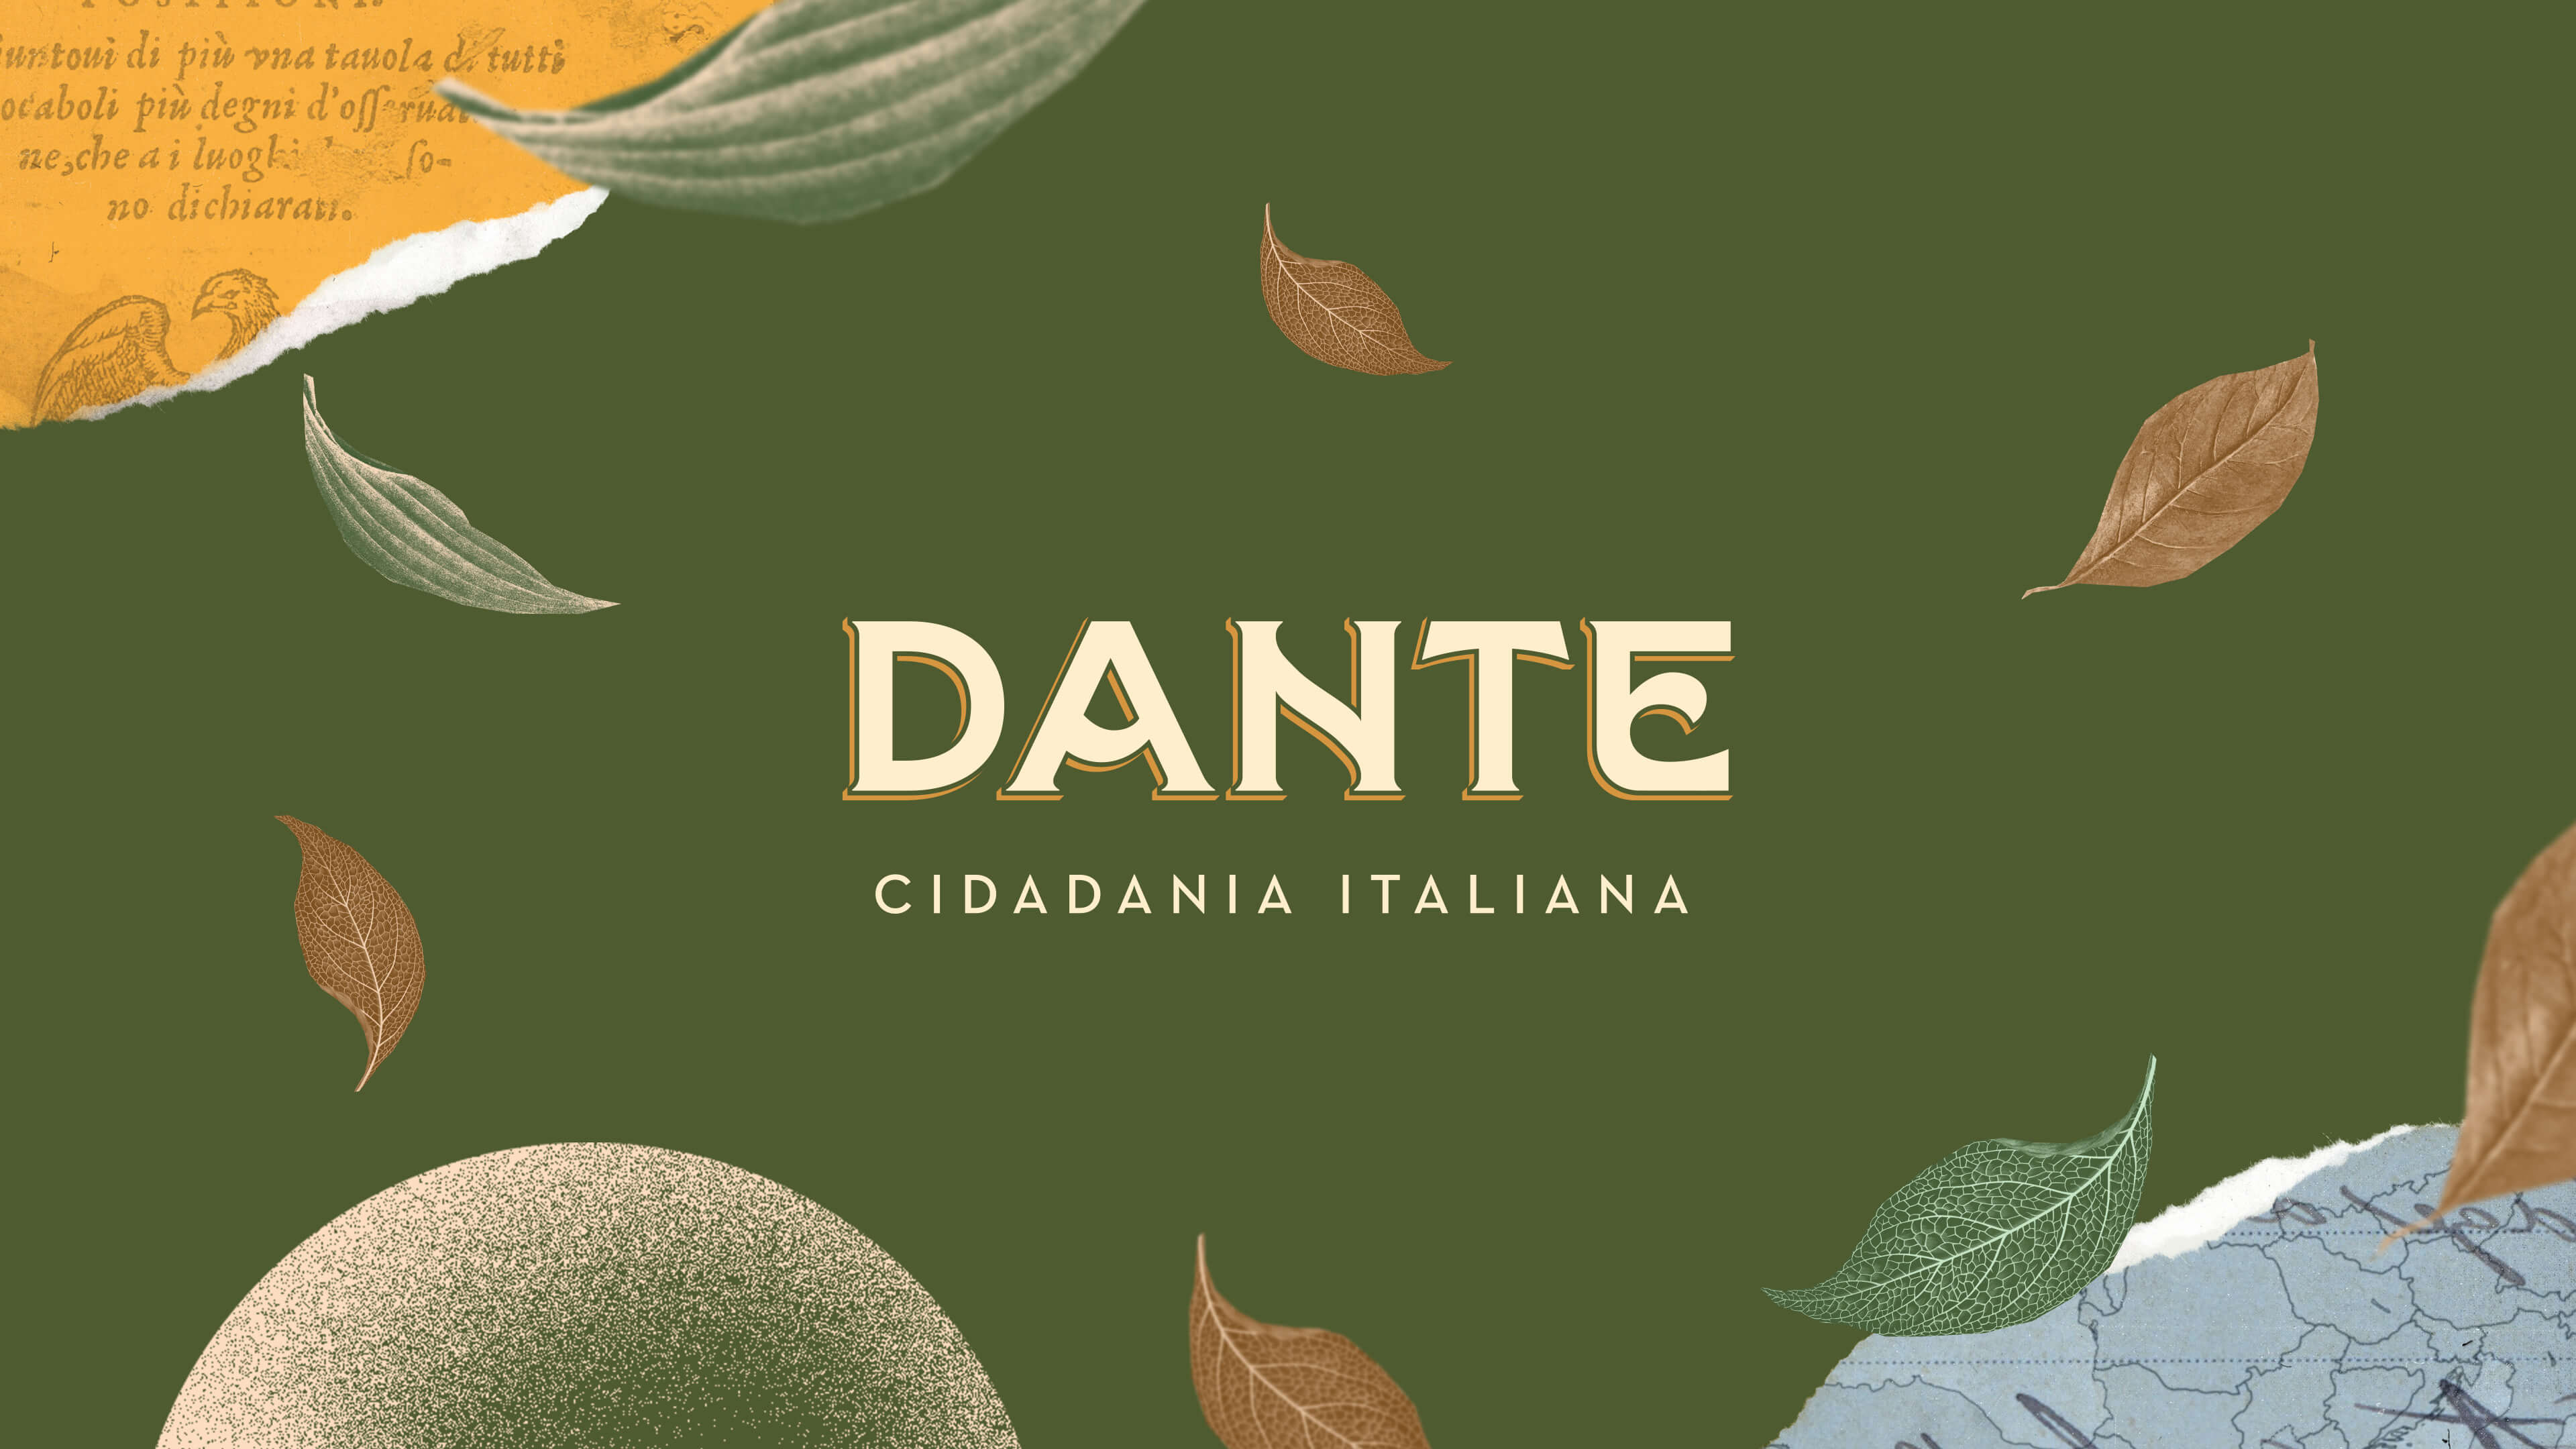 ceu-design_dante-cidadania-italiana_02